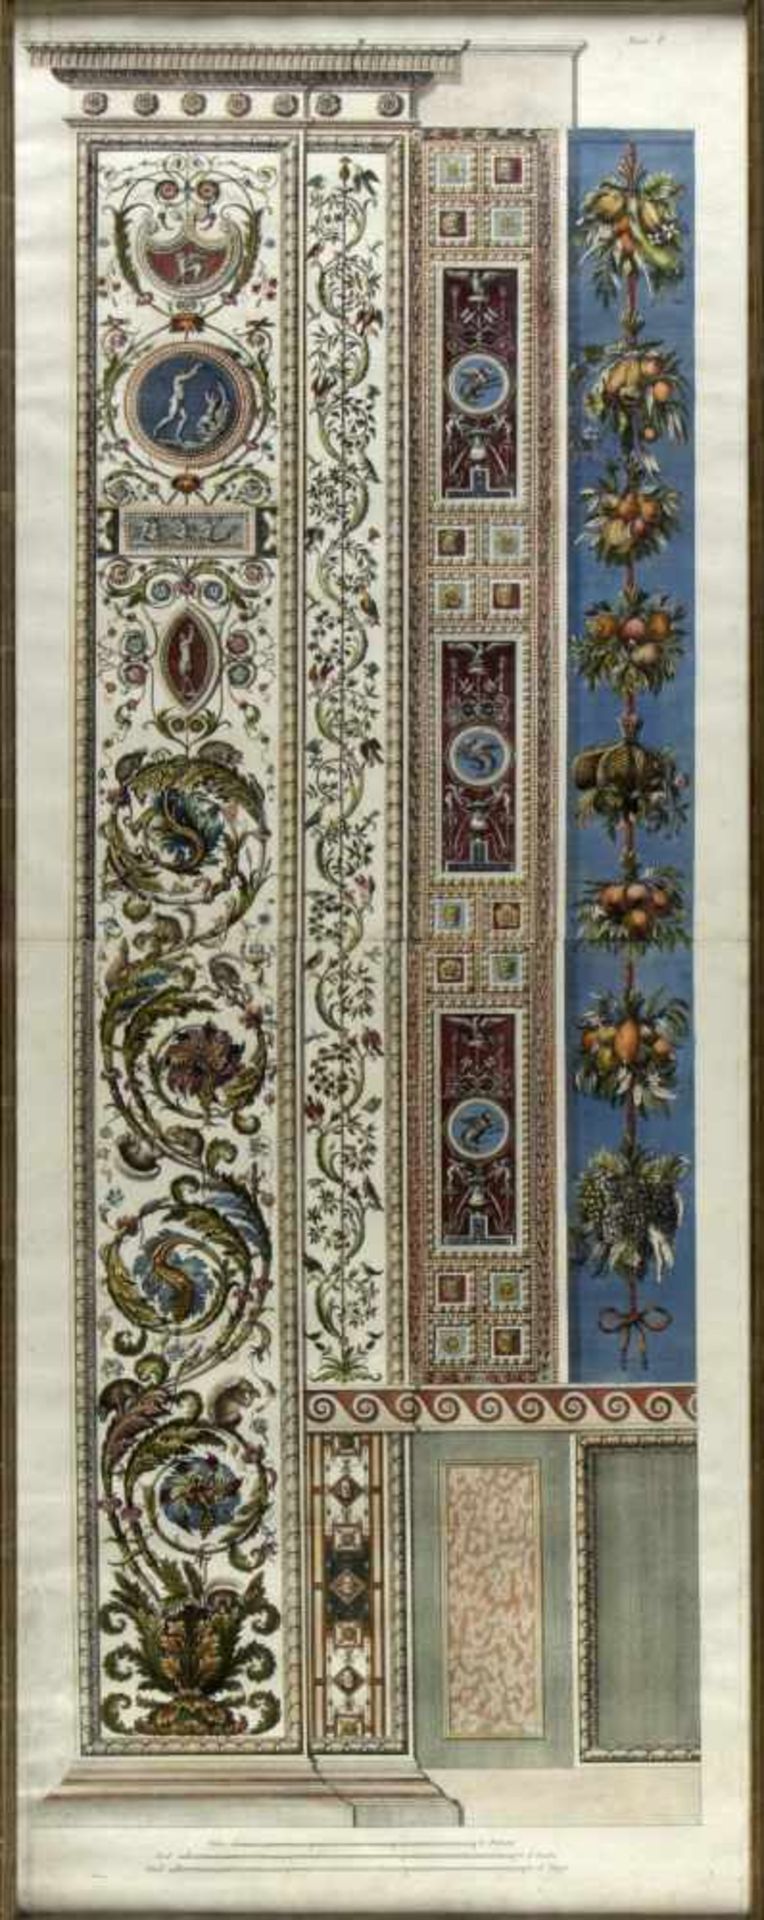 Ottaviani, Giovanni. 1735 - 1808. Zugeschrieben Le logge del vaticano. 2 kol. Kupferstiche. 103 x 39 - Bild 3 aus 3